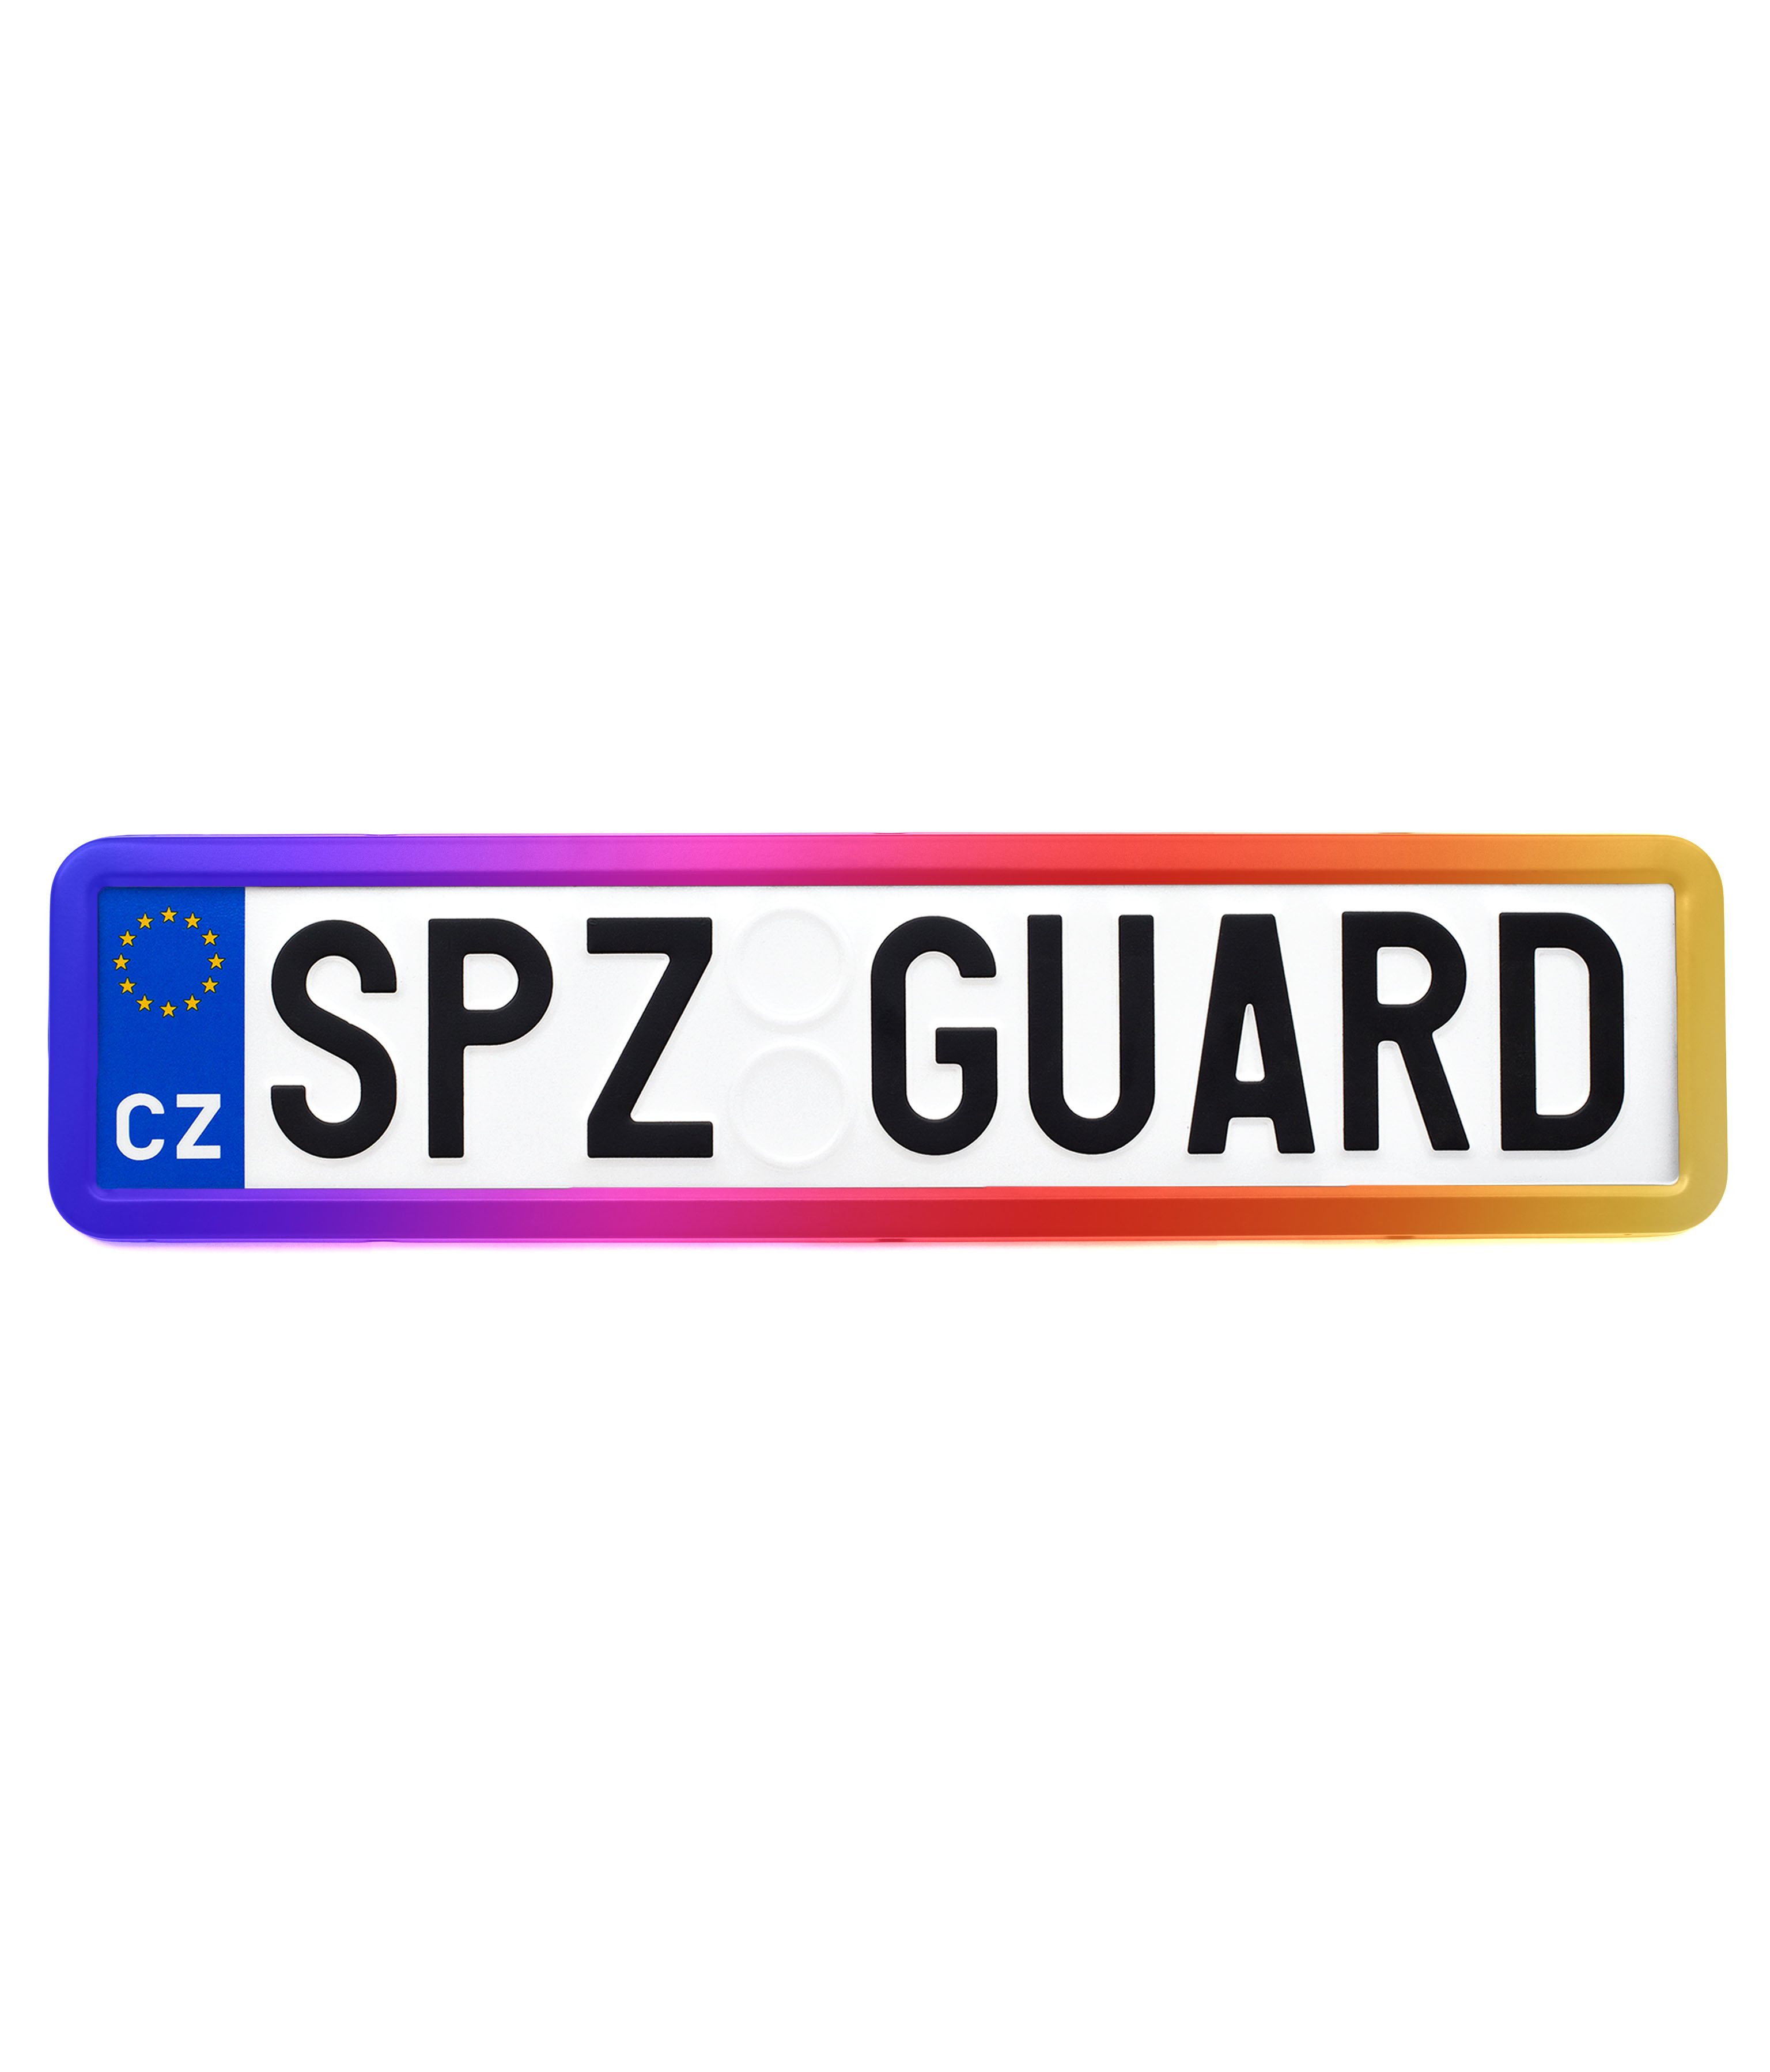 SPZ Guard instagram